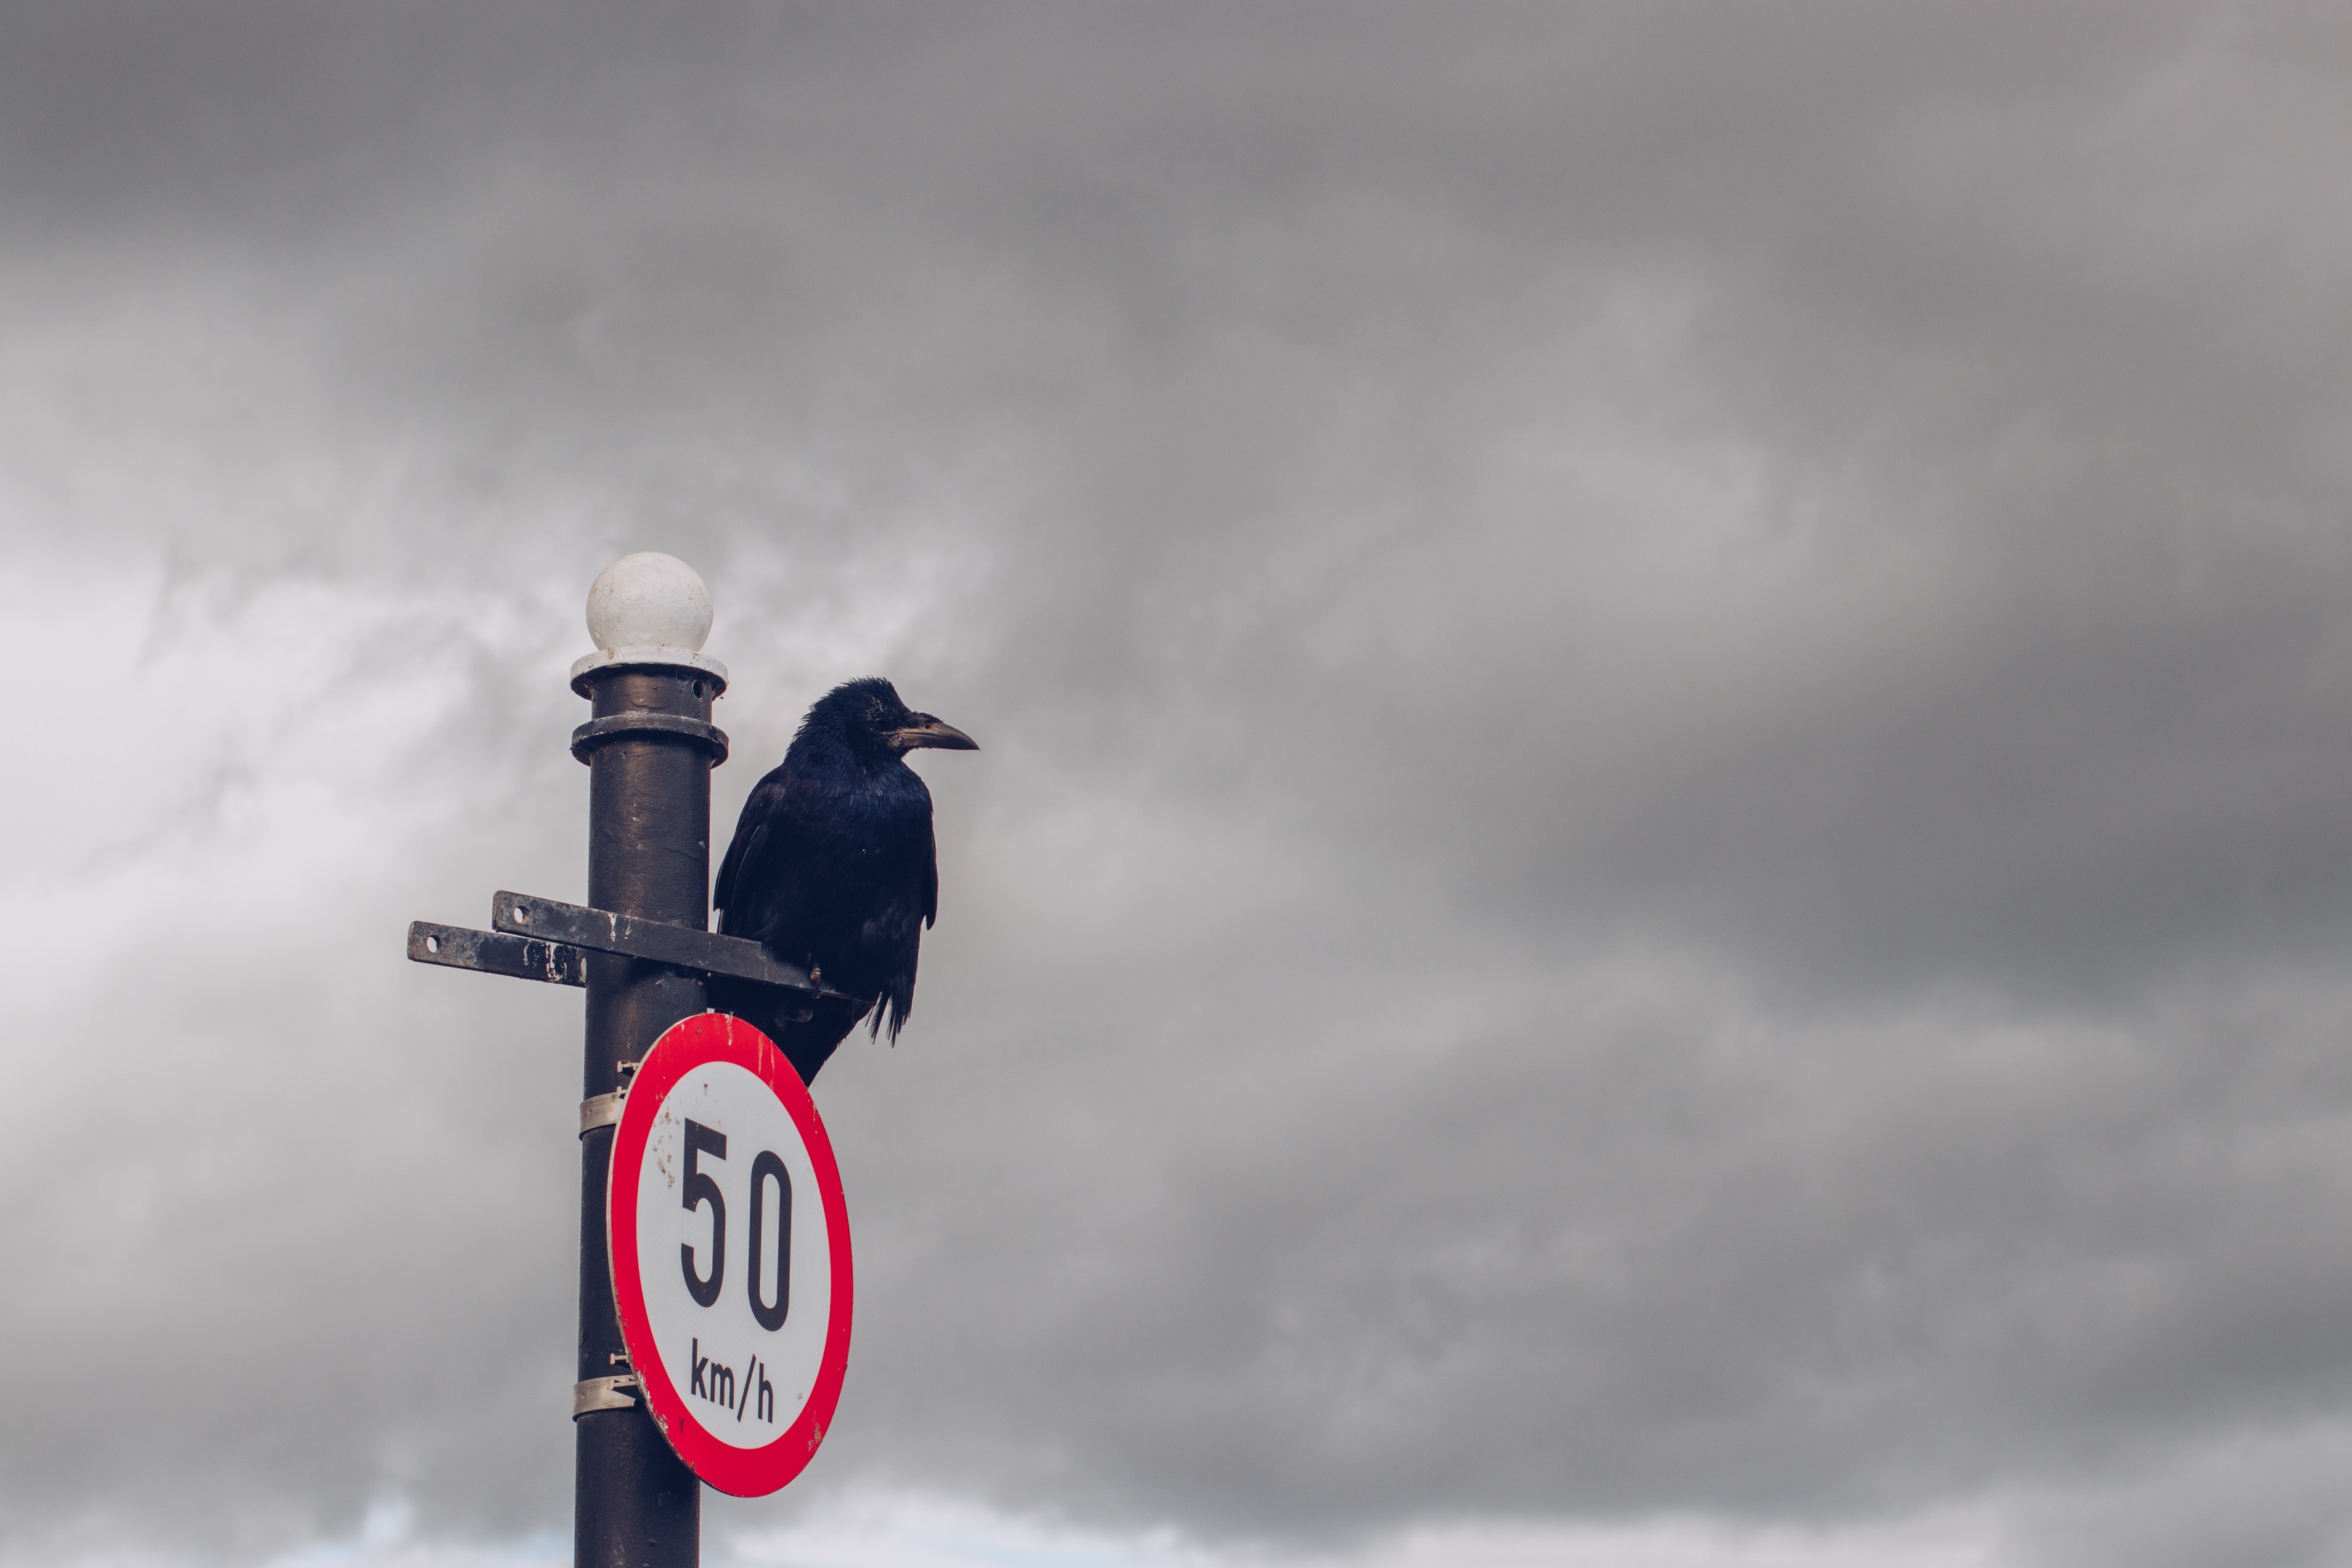 raven, post, animals, clouds, bird, pillar, mainly cloudy, overcast, sign